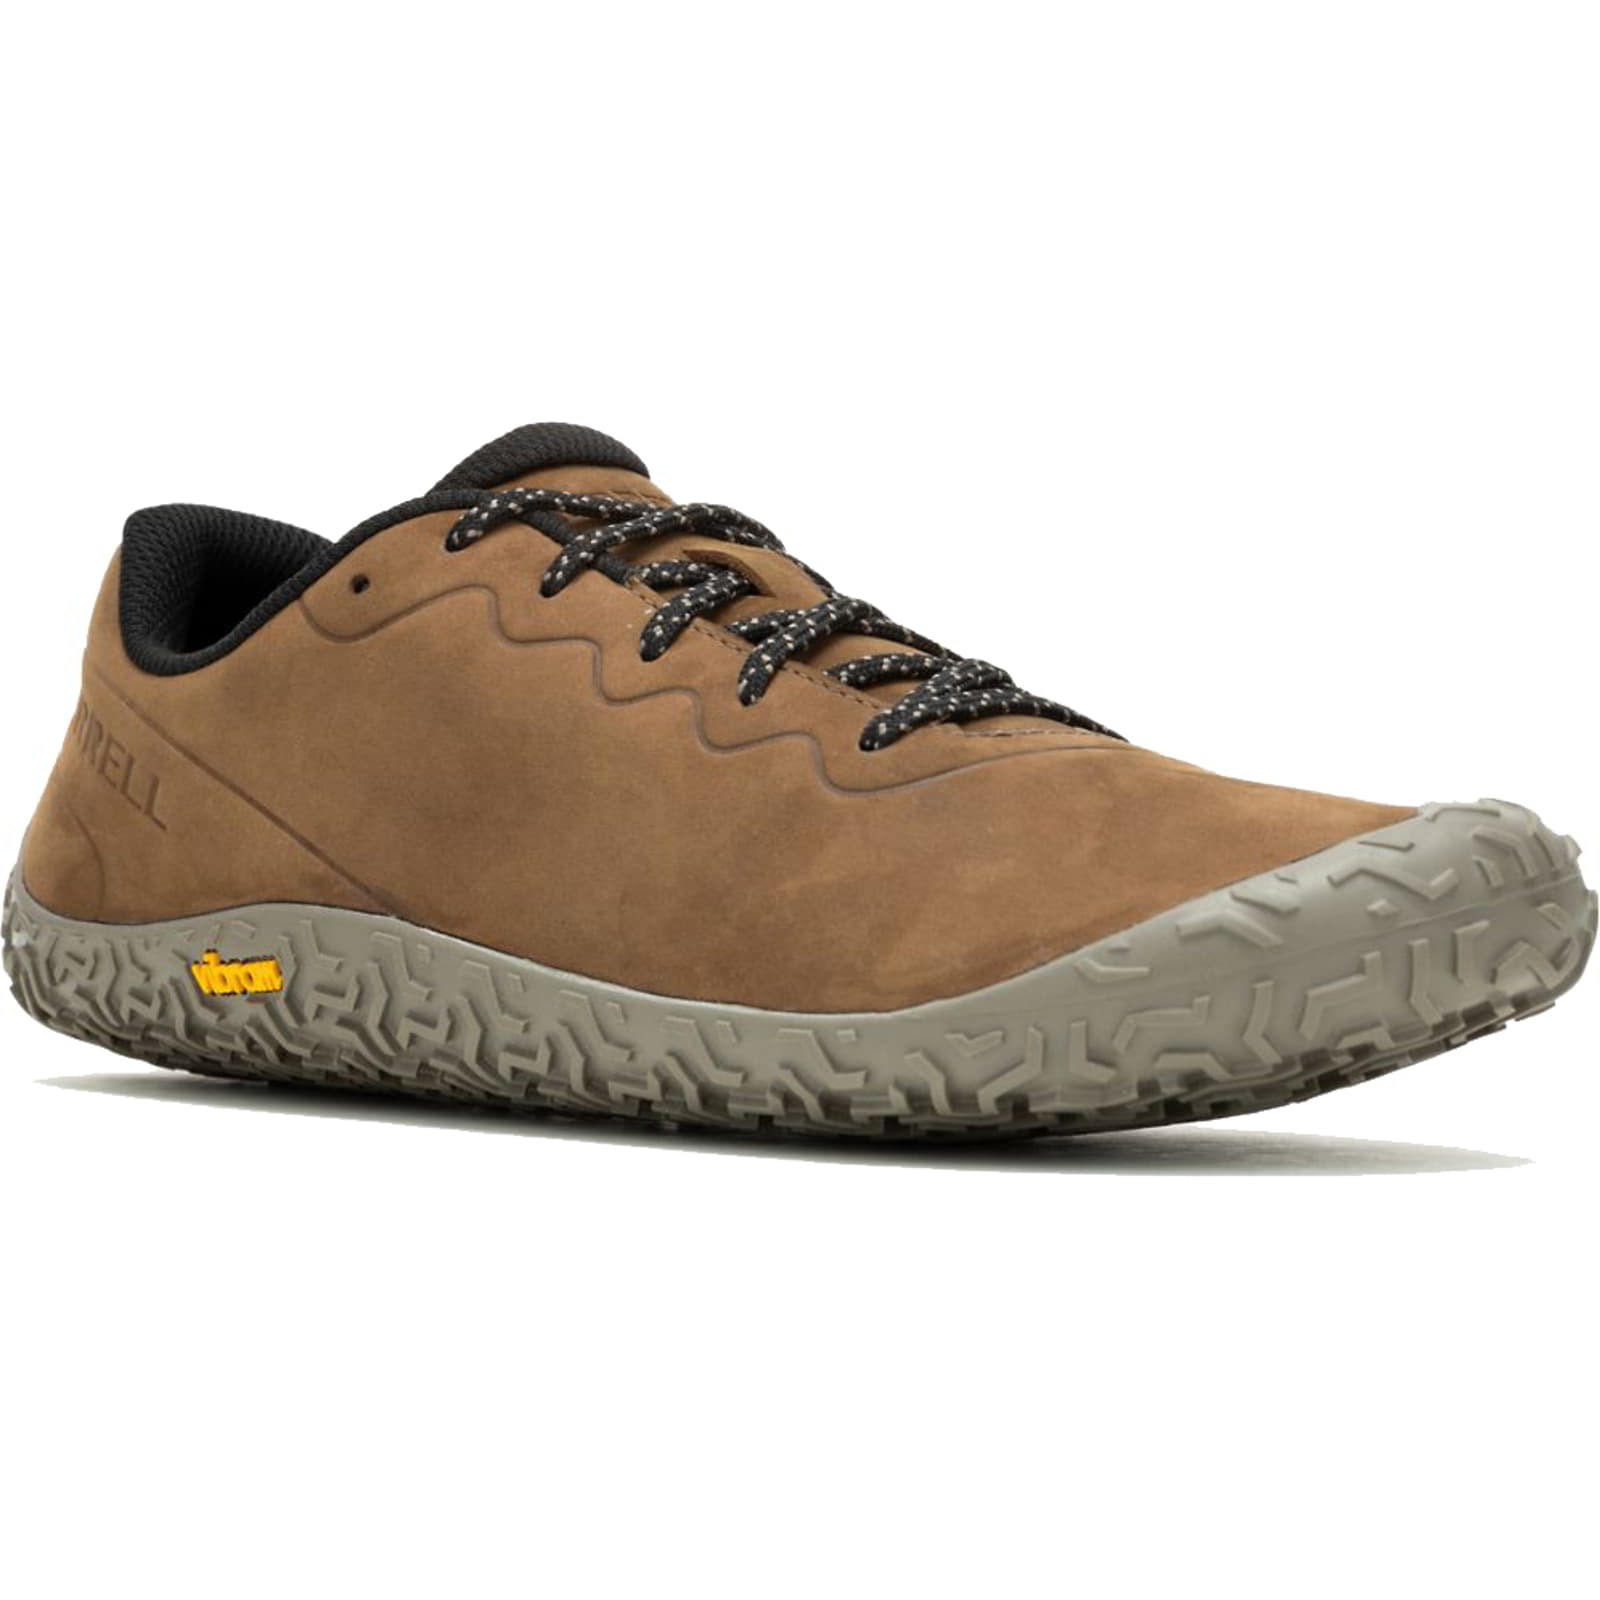 Merrell Men's Vapor Glove 6 Leather Barefoot Running Shoes Trainers - UK 11